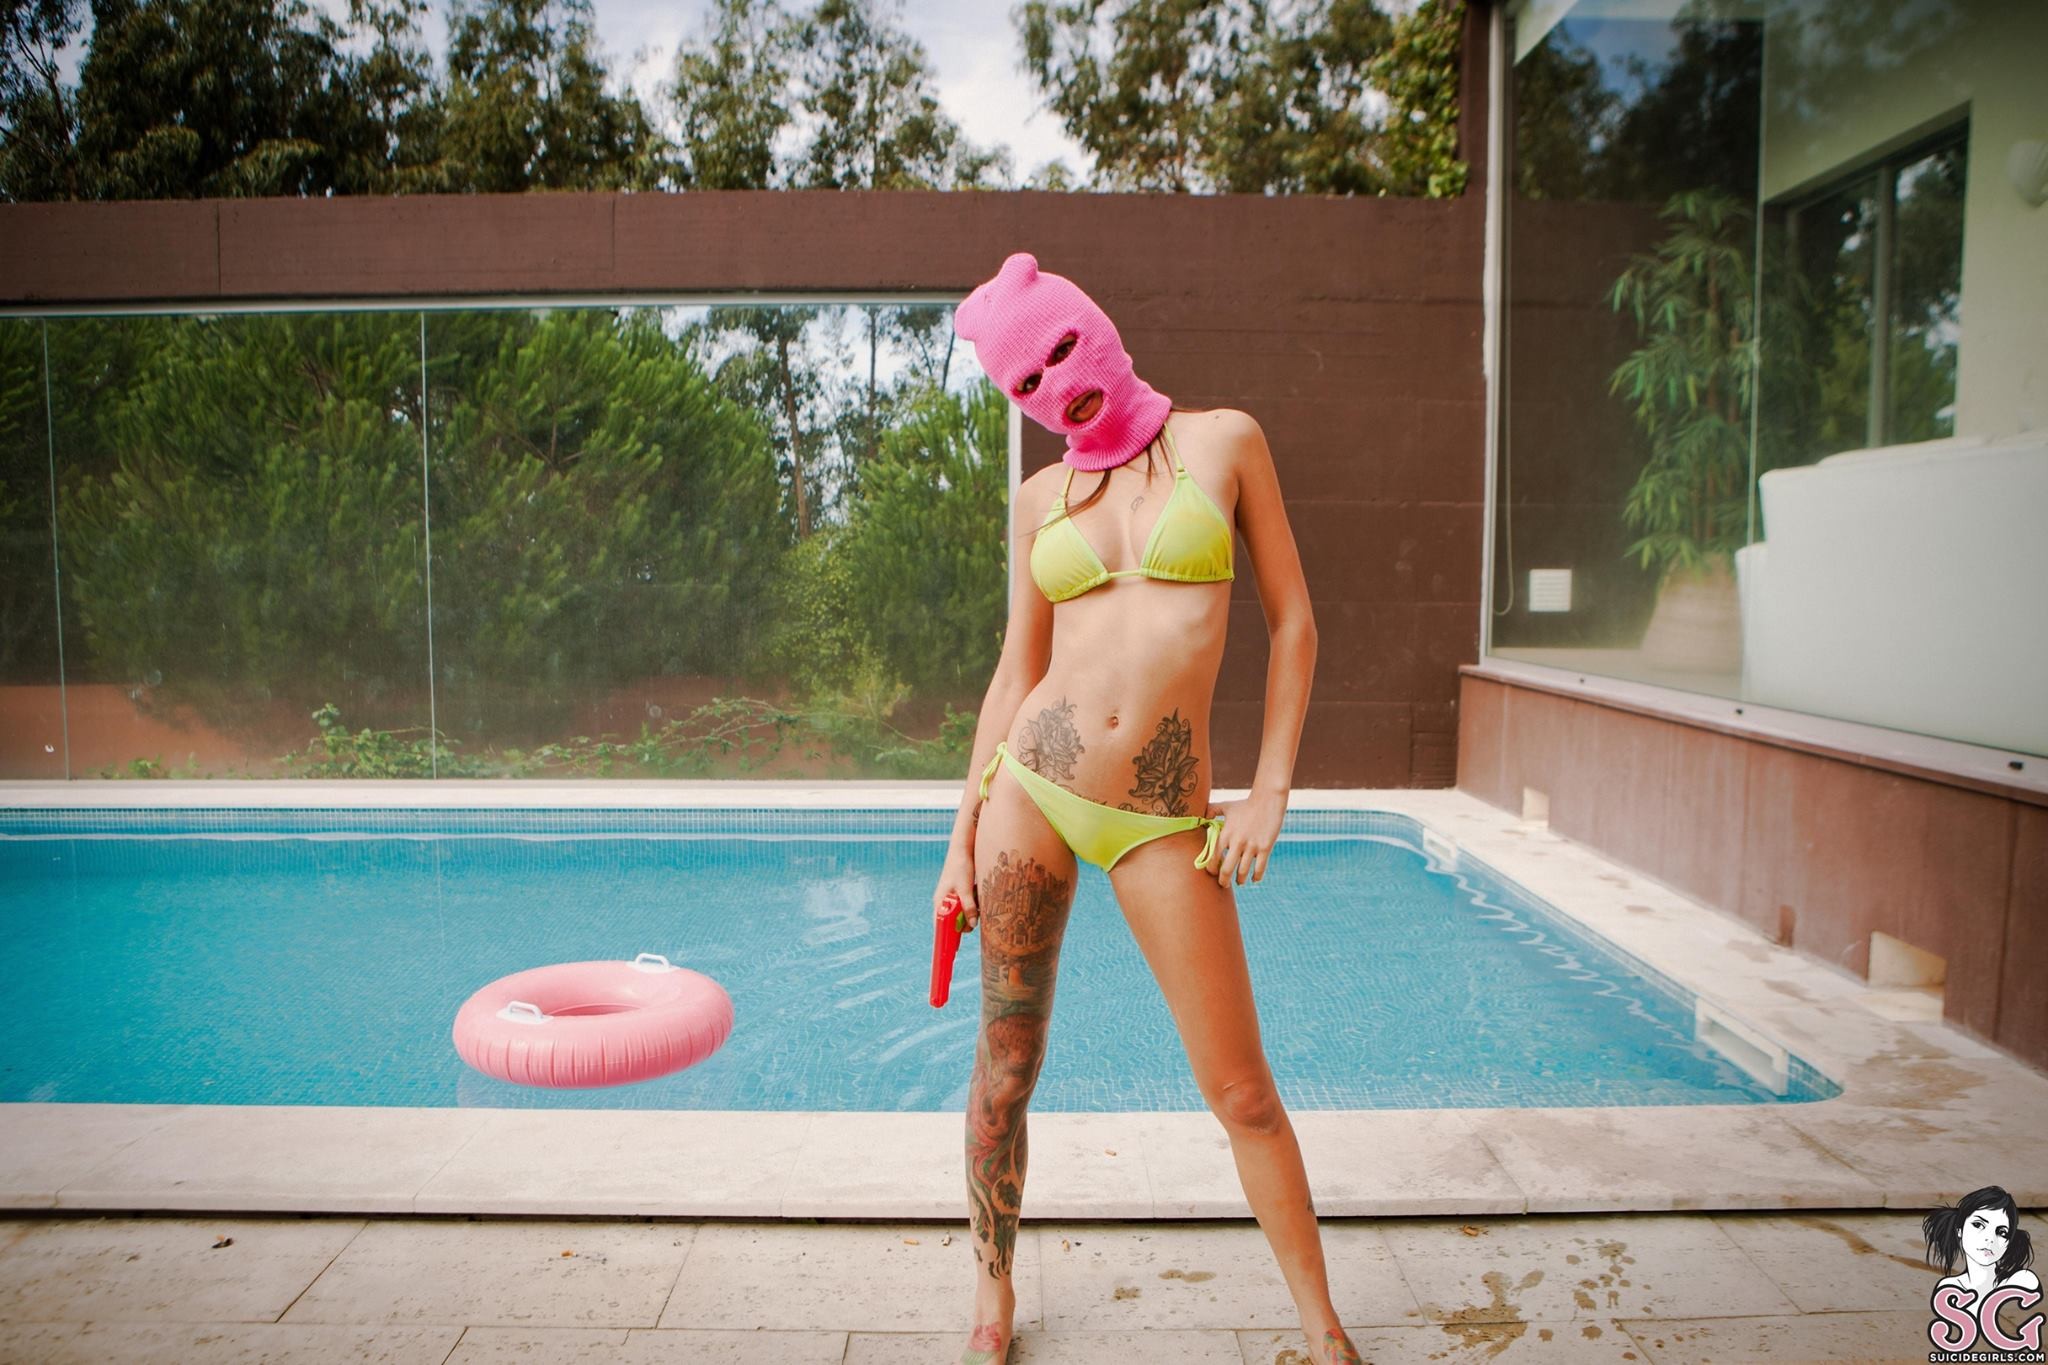 People 2048x1365 tattoo women bikini swimming pool Suicide Girls inked girls belly standing women outdoors outdoors mask water legs ski mask model